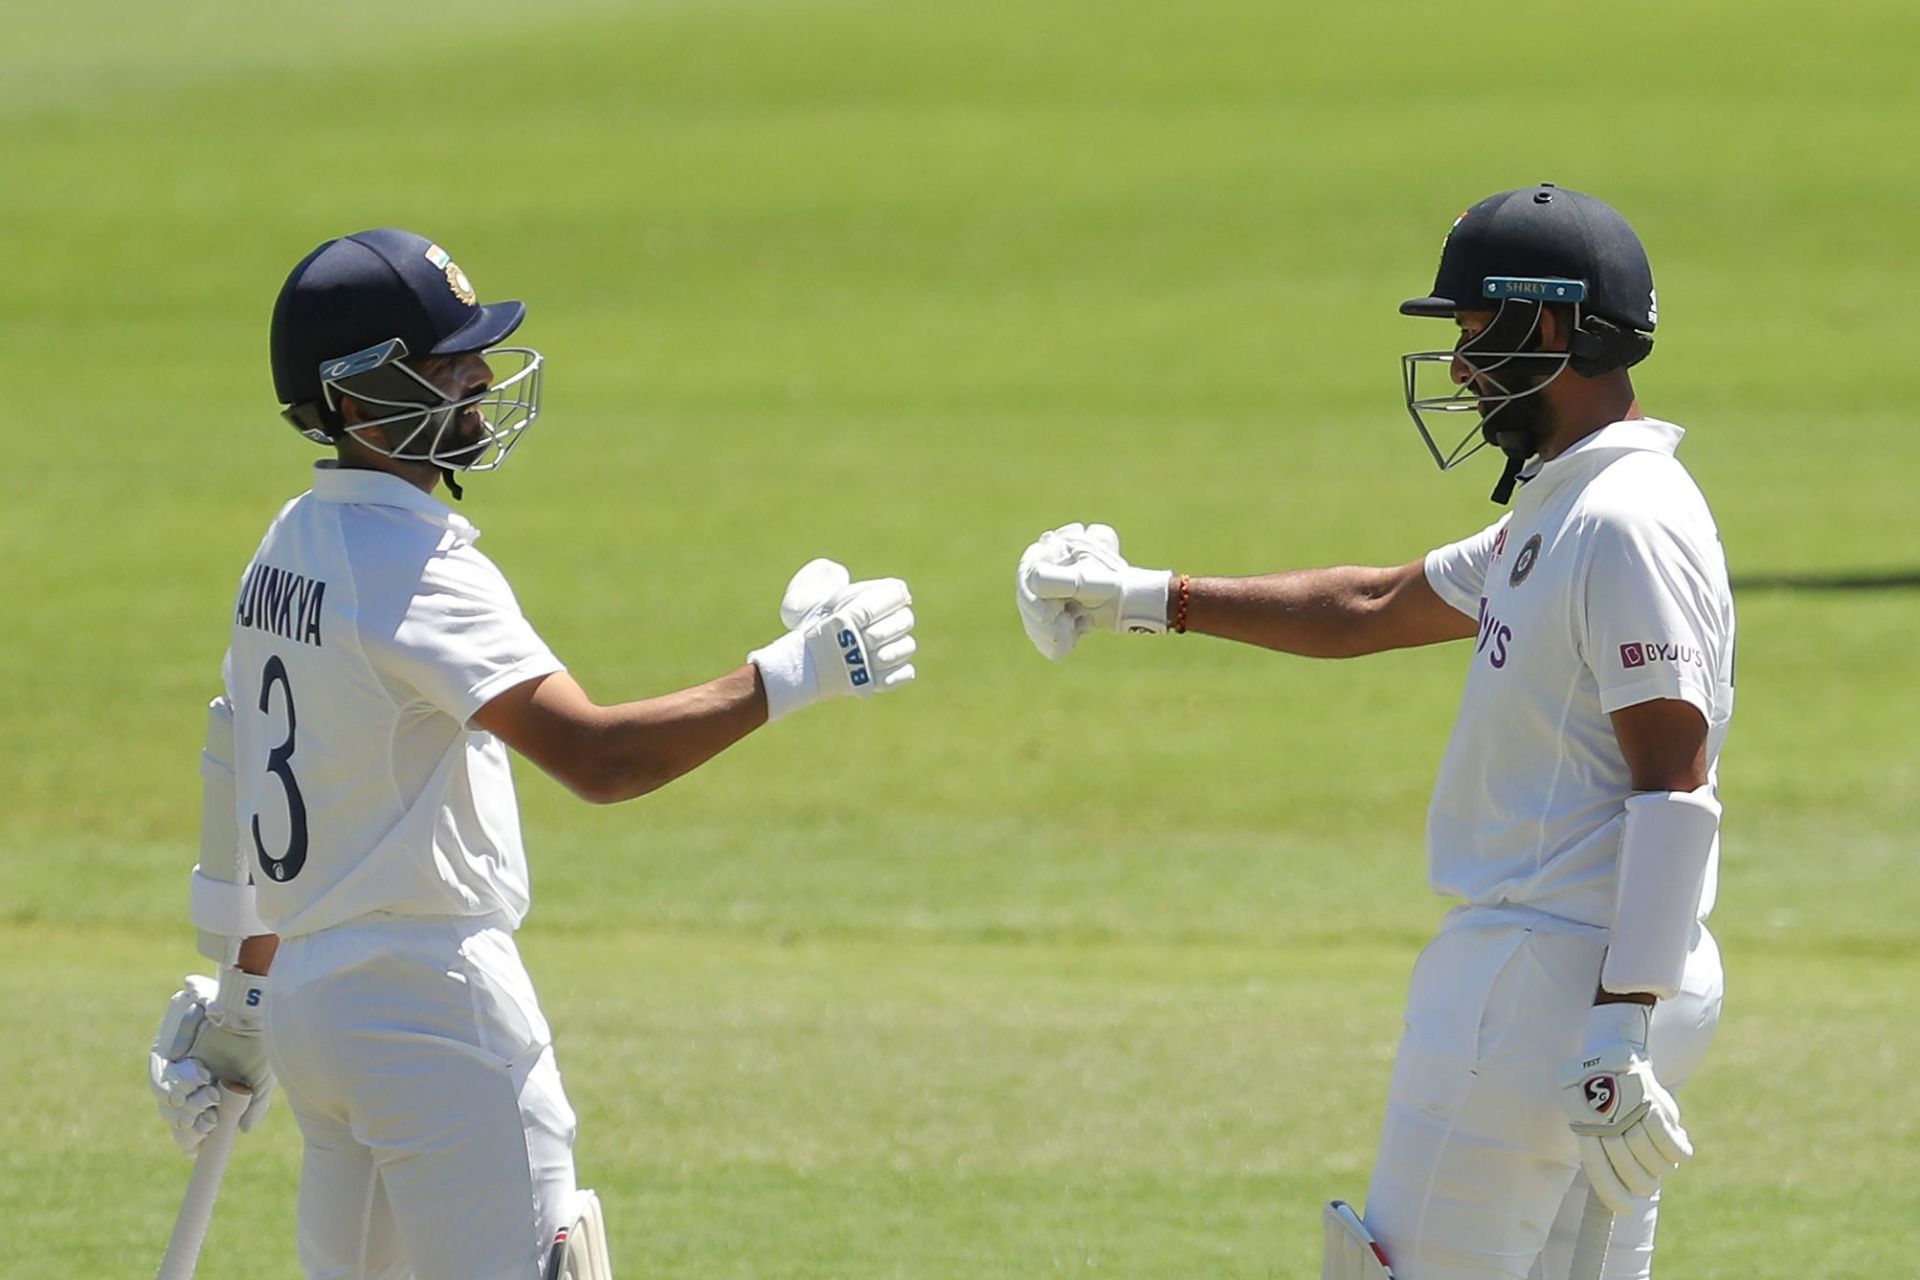 Ajinkya Rahane and Cheteshwar Pujara were found wanting in the Test series against South Africa